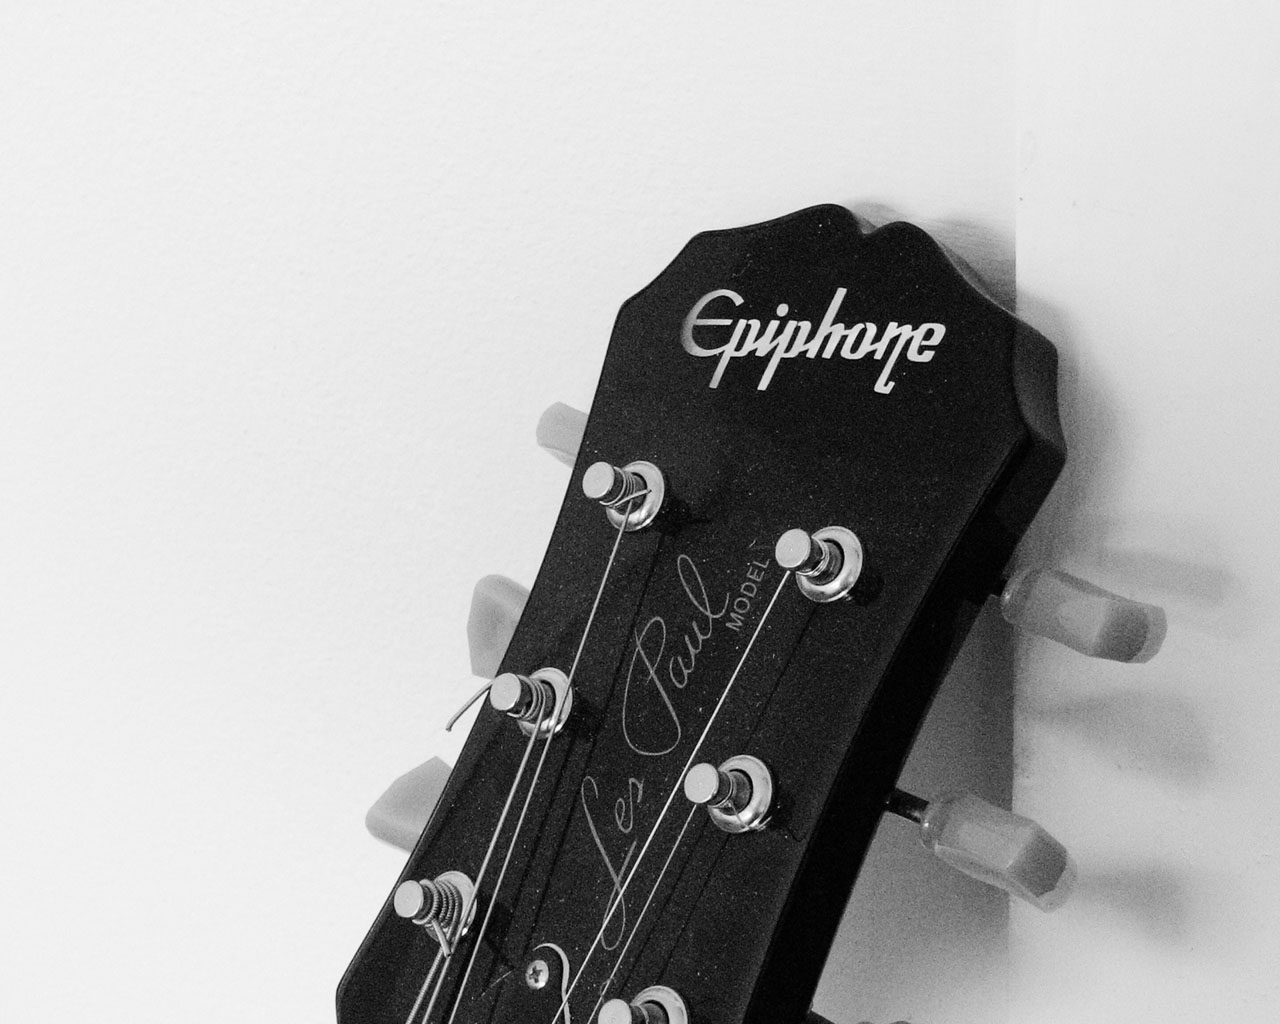 Handy-Wallpaper Musik, Gitarre kostenlos herunterladen.